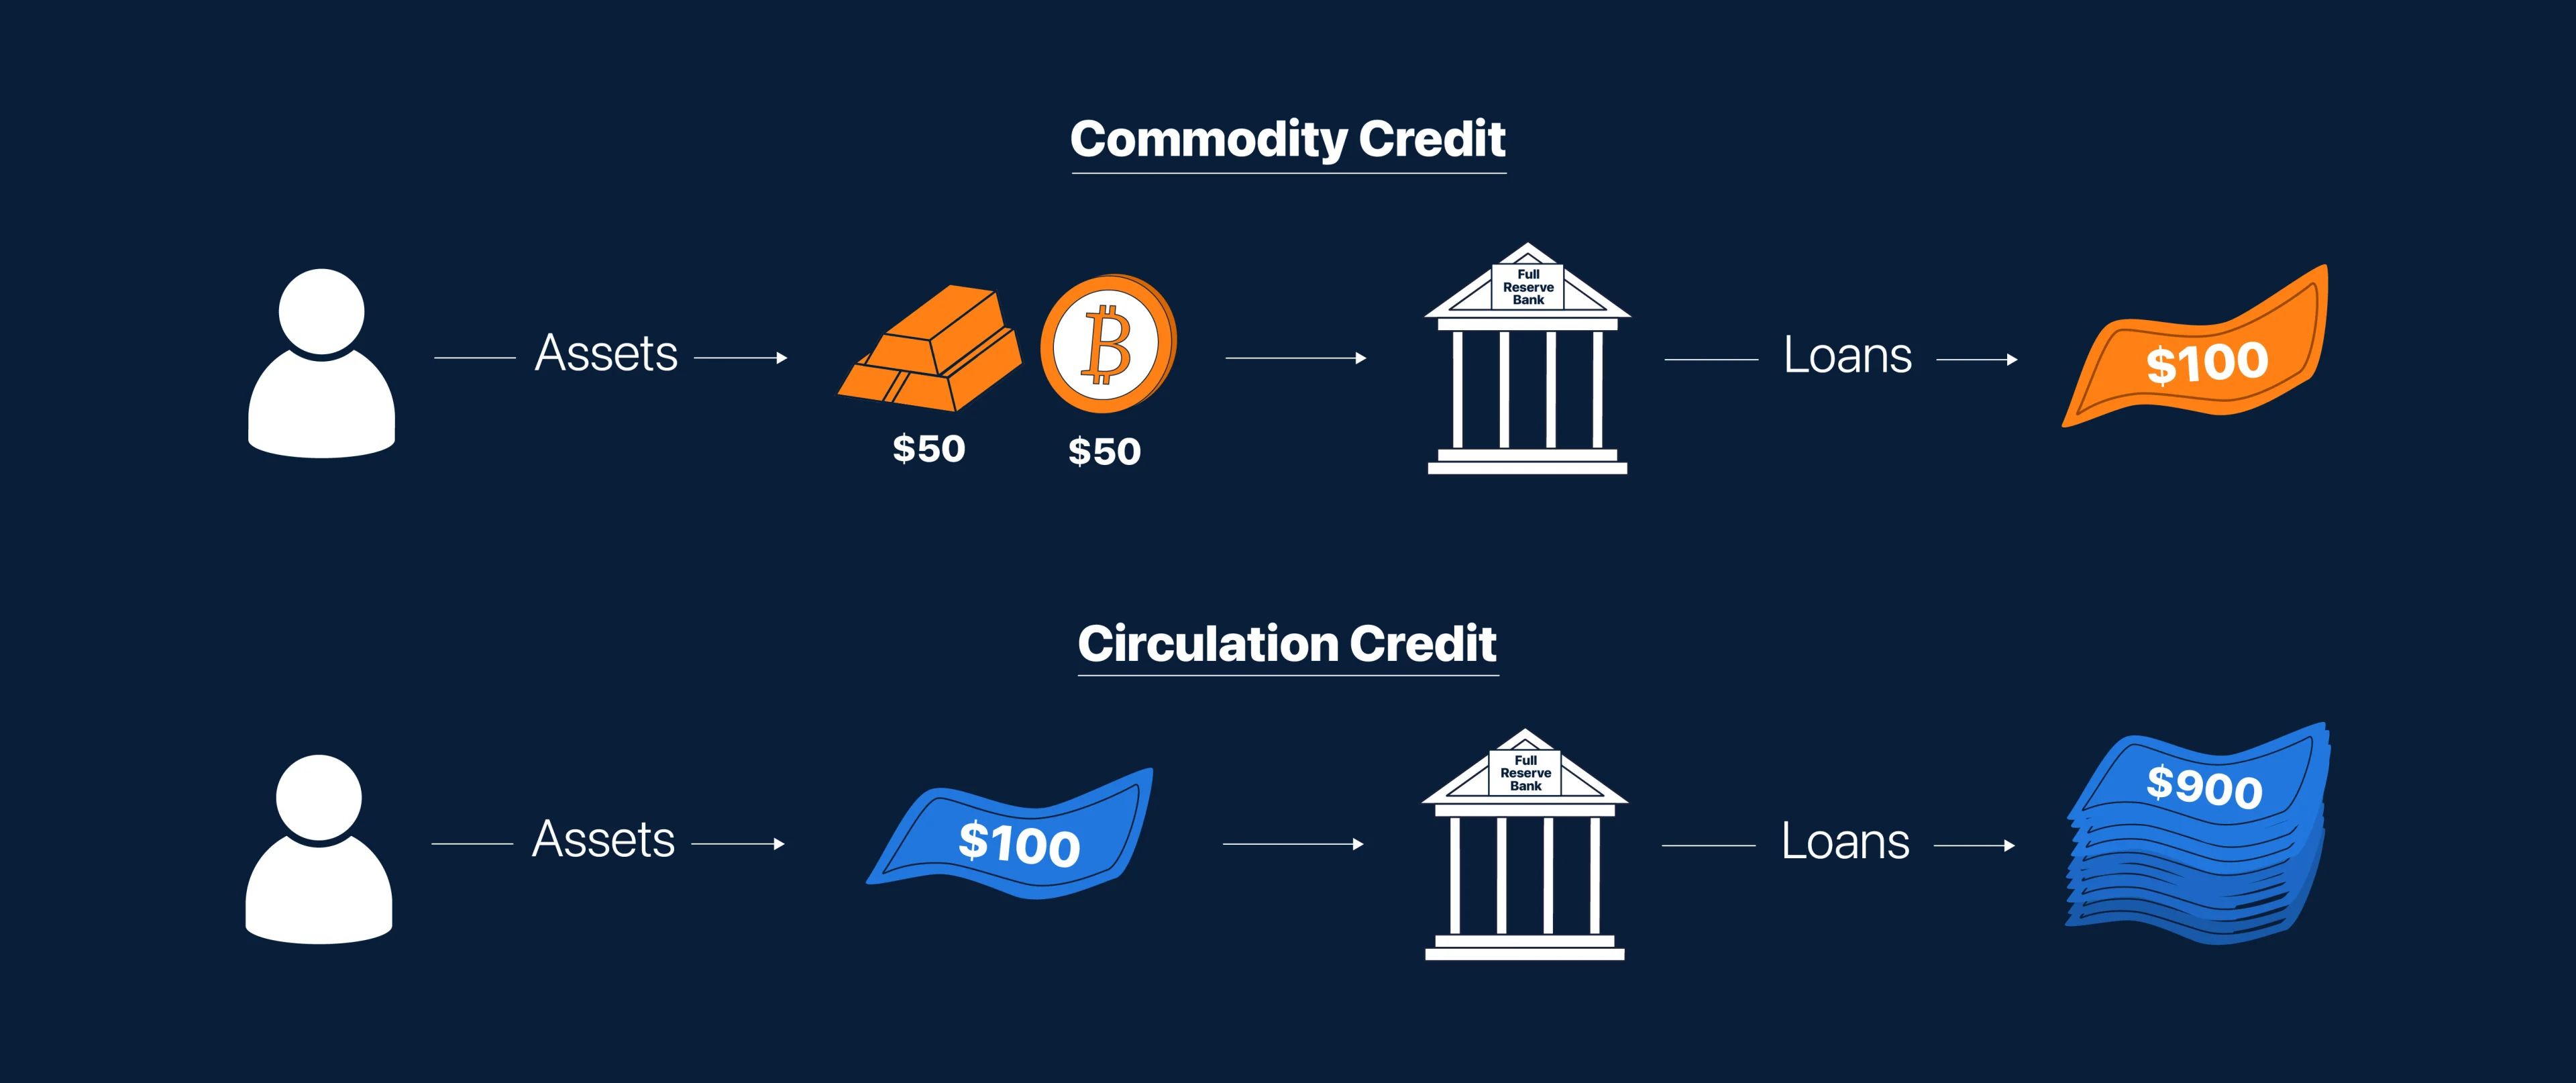 Commodity Credit vs Circulation Credit